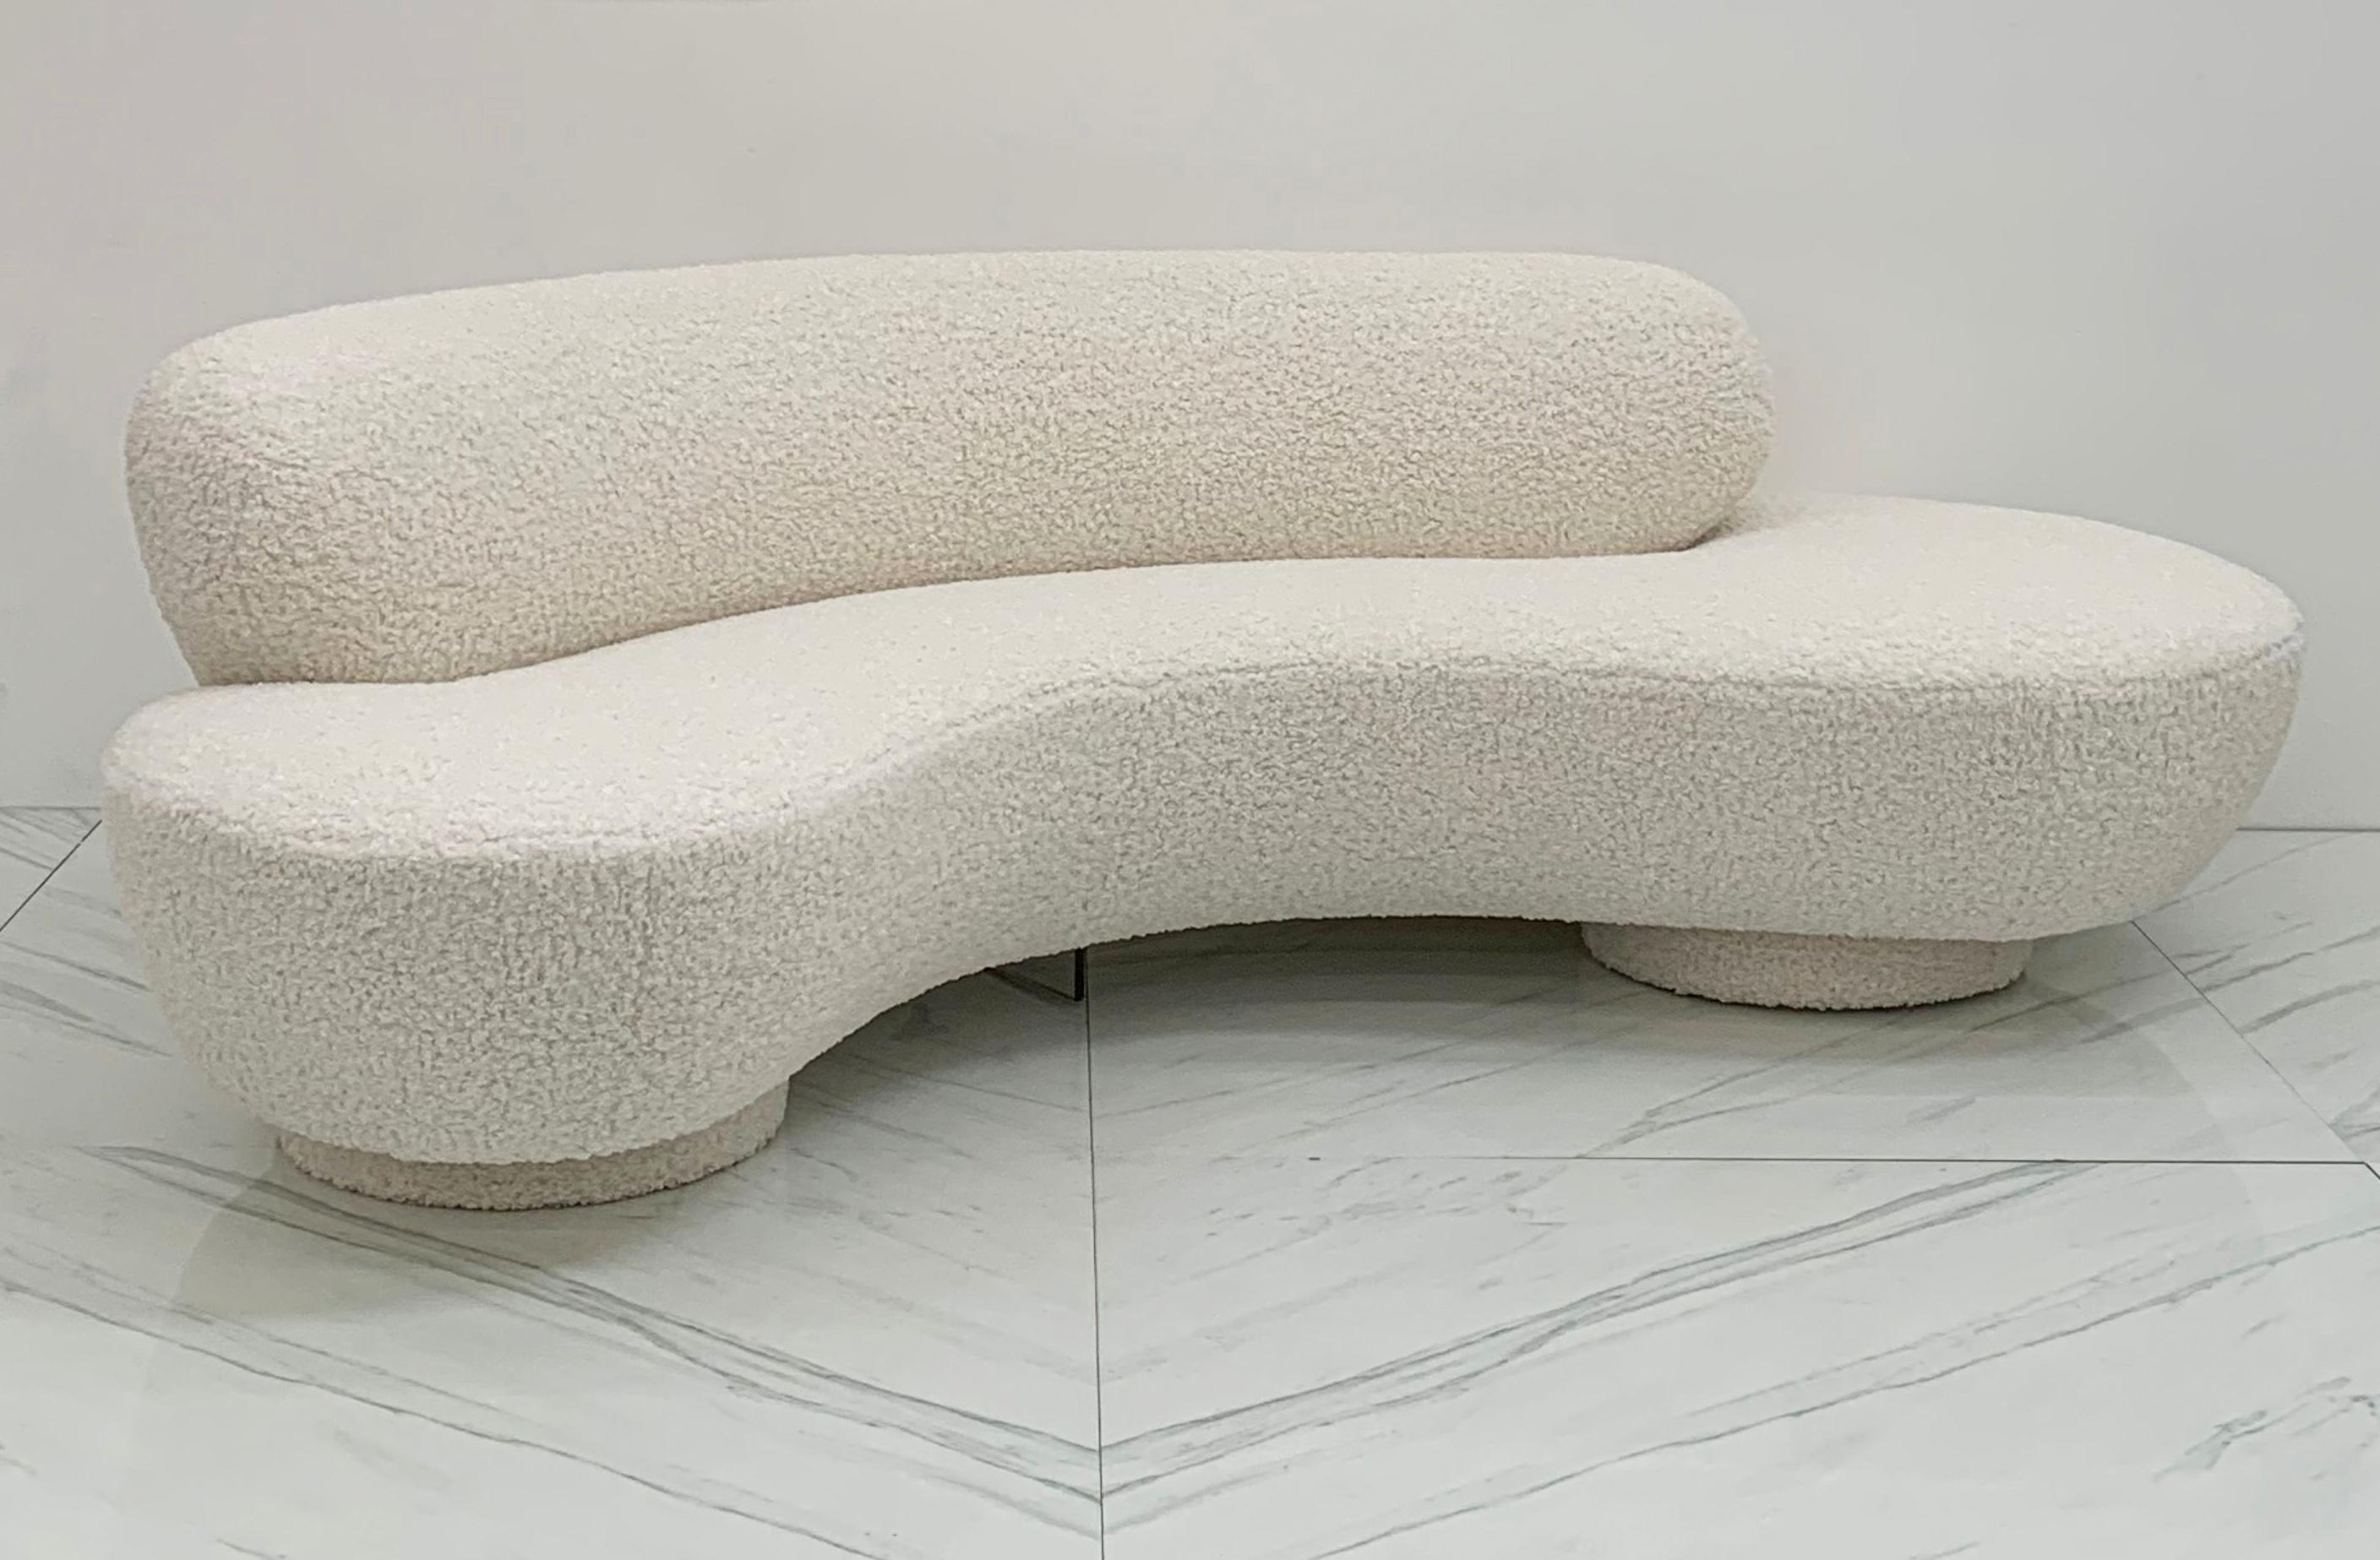 Bouclé Vladimir Kagan Serpentine Cloud Sofa for Directional in Heavy Boucle